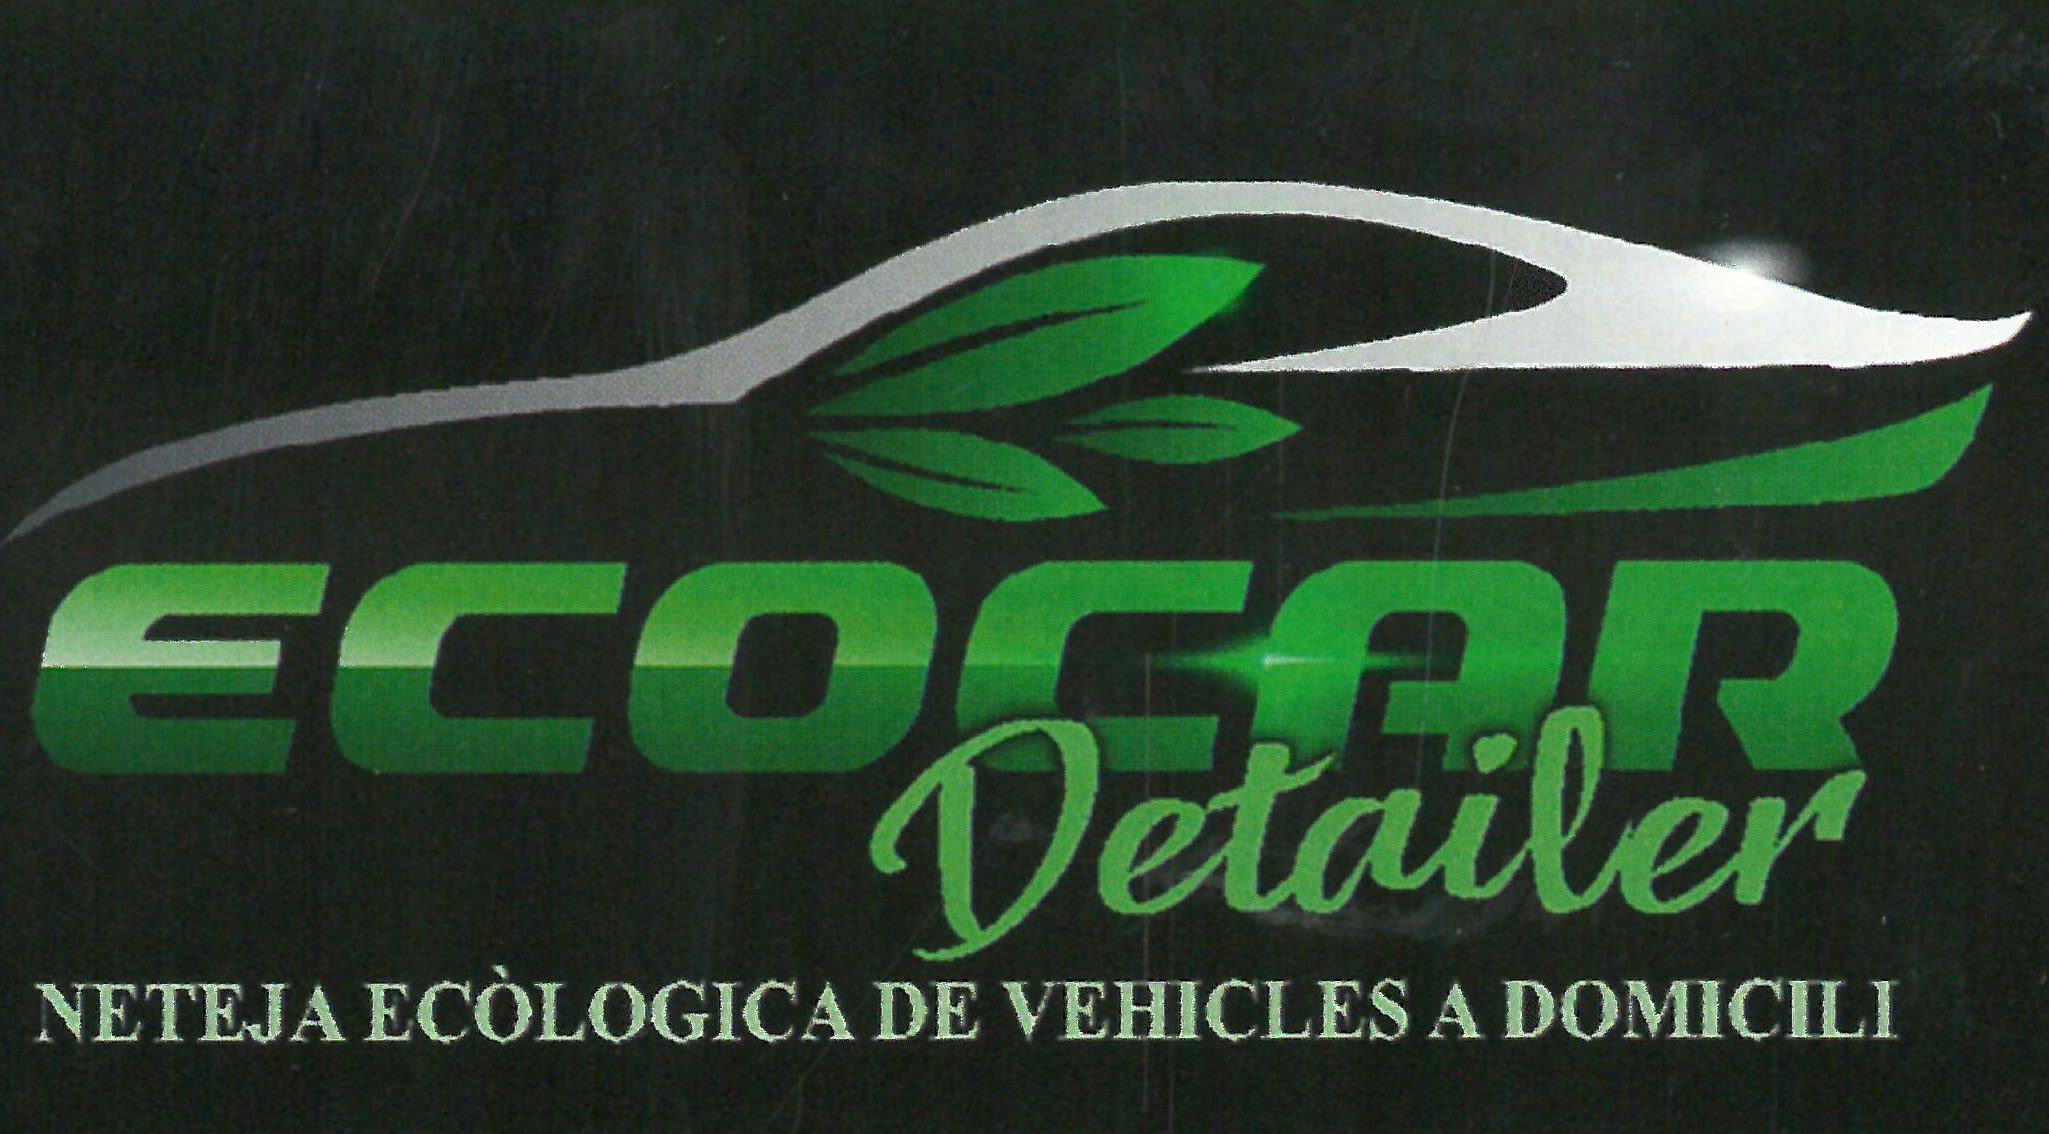 Ecocar Detailer